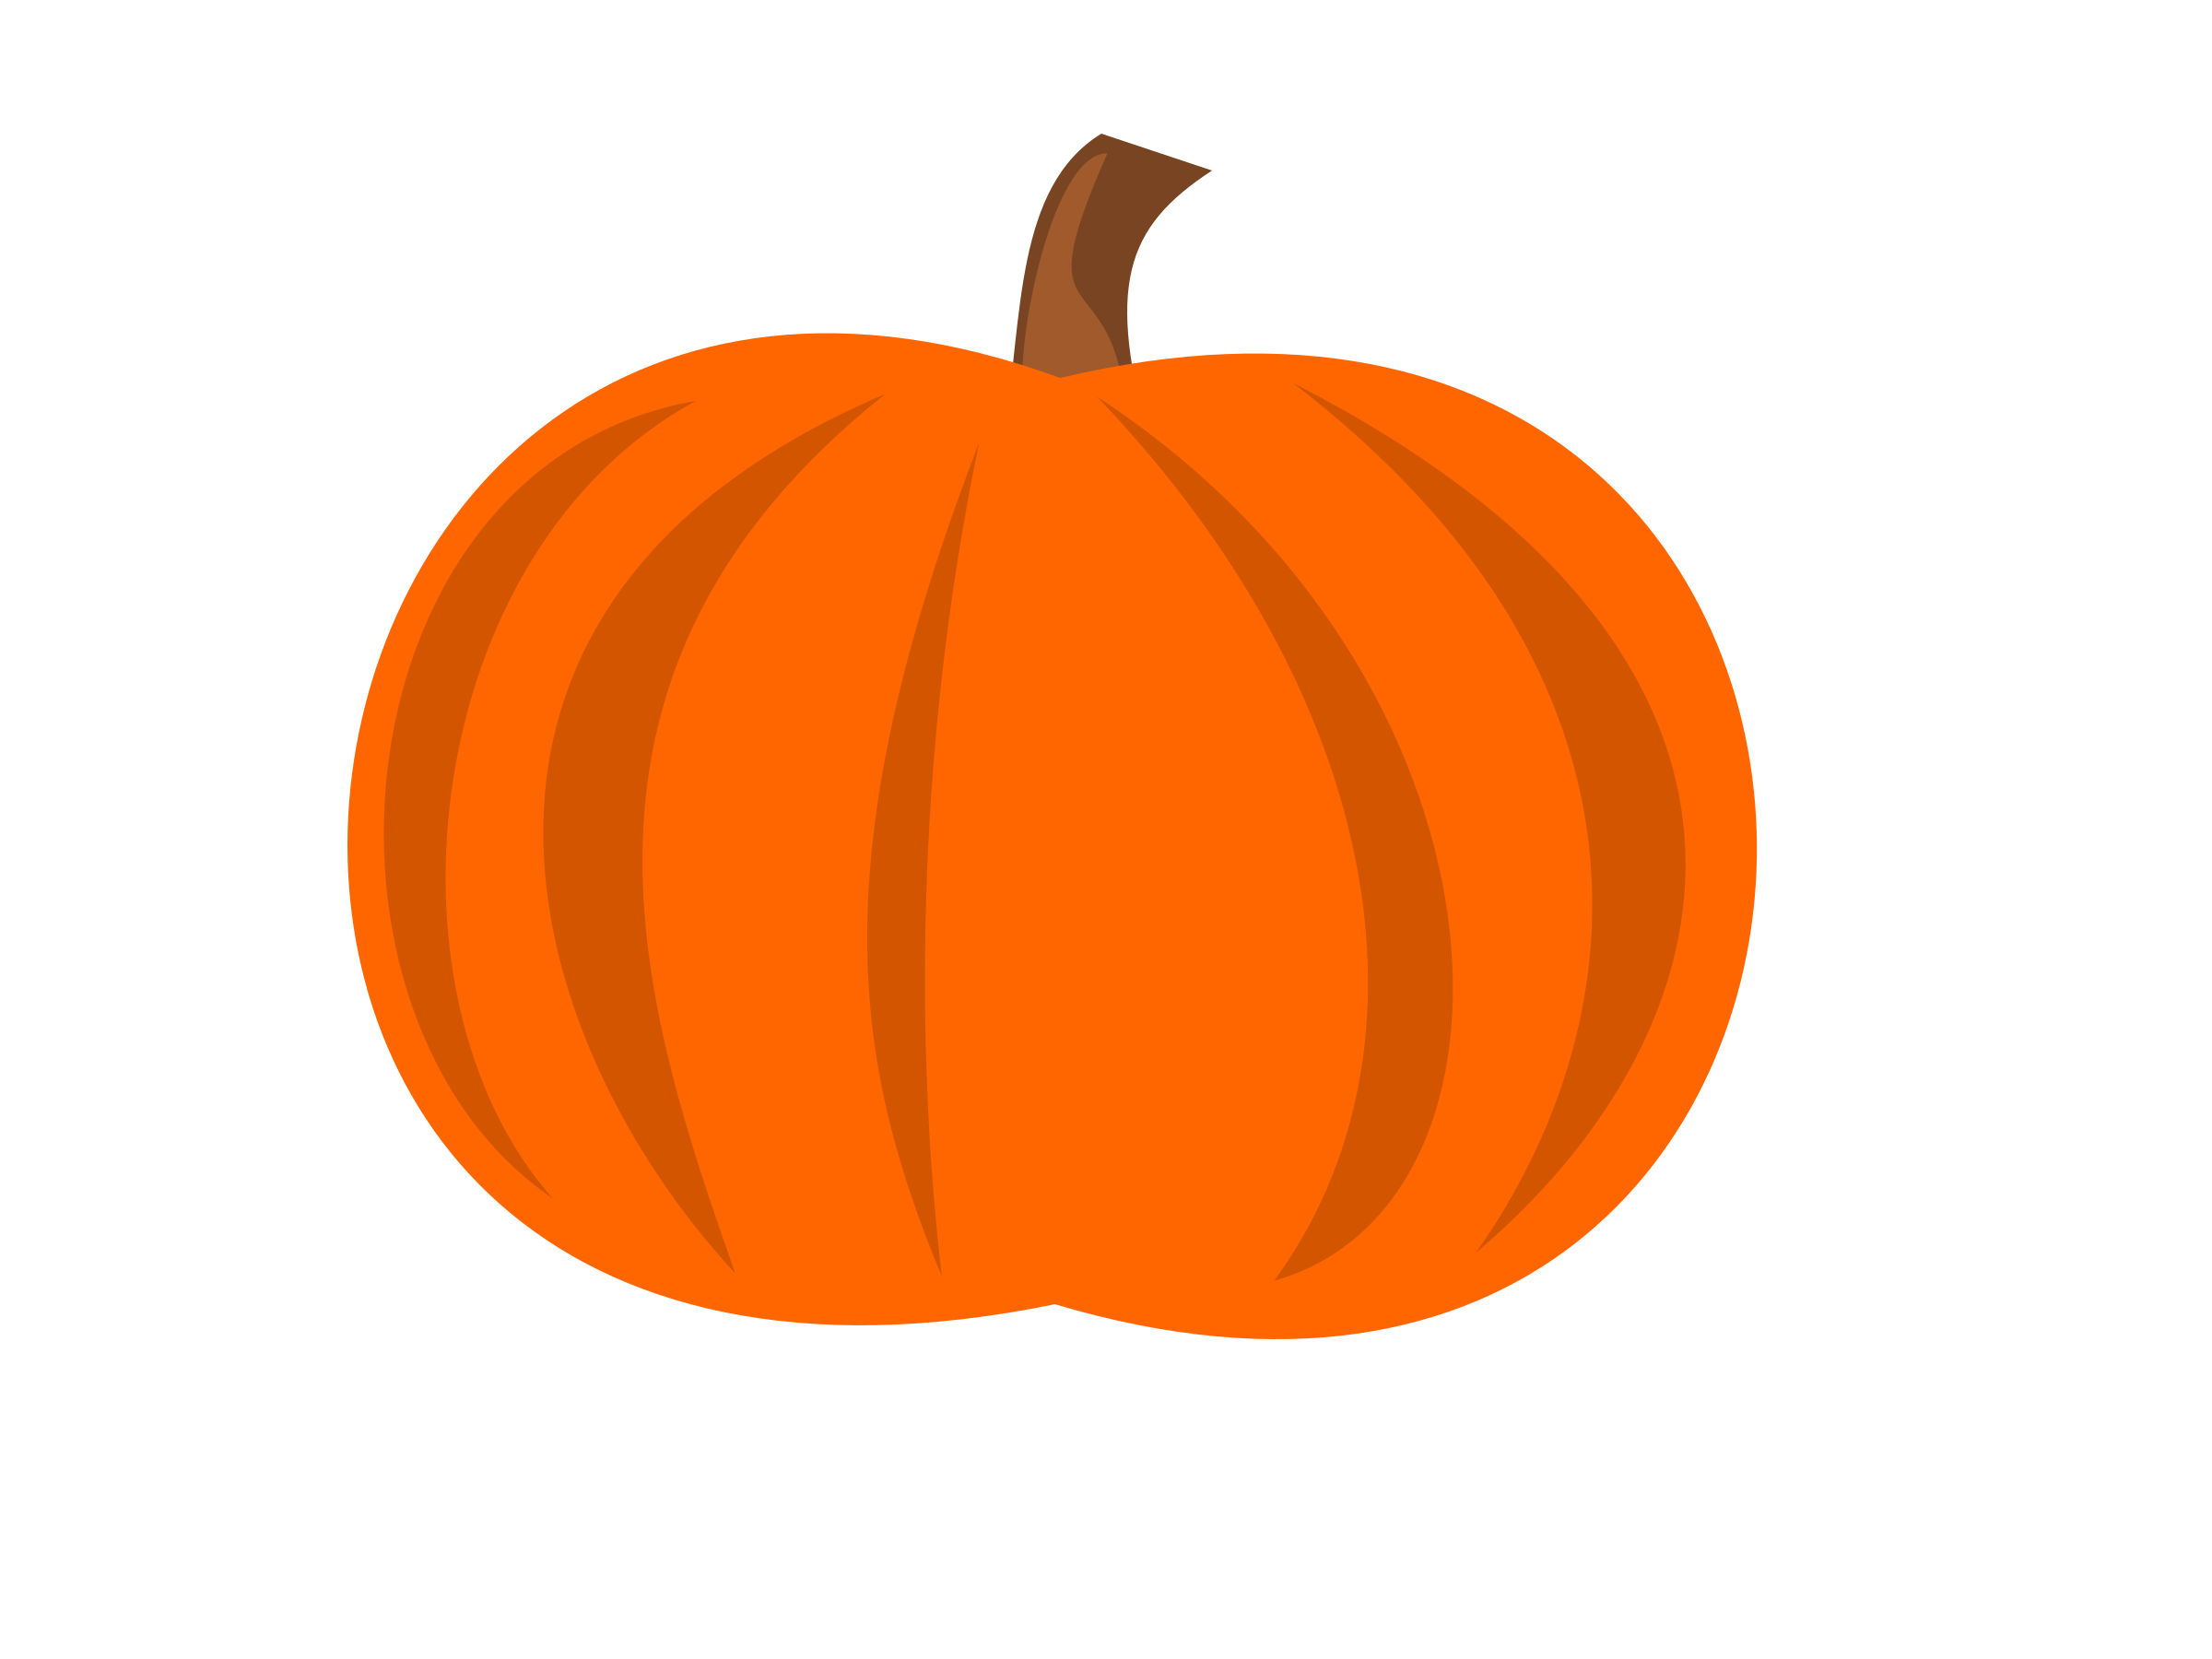 free pumpkin clipart